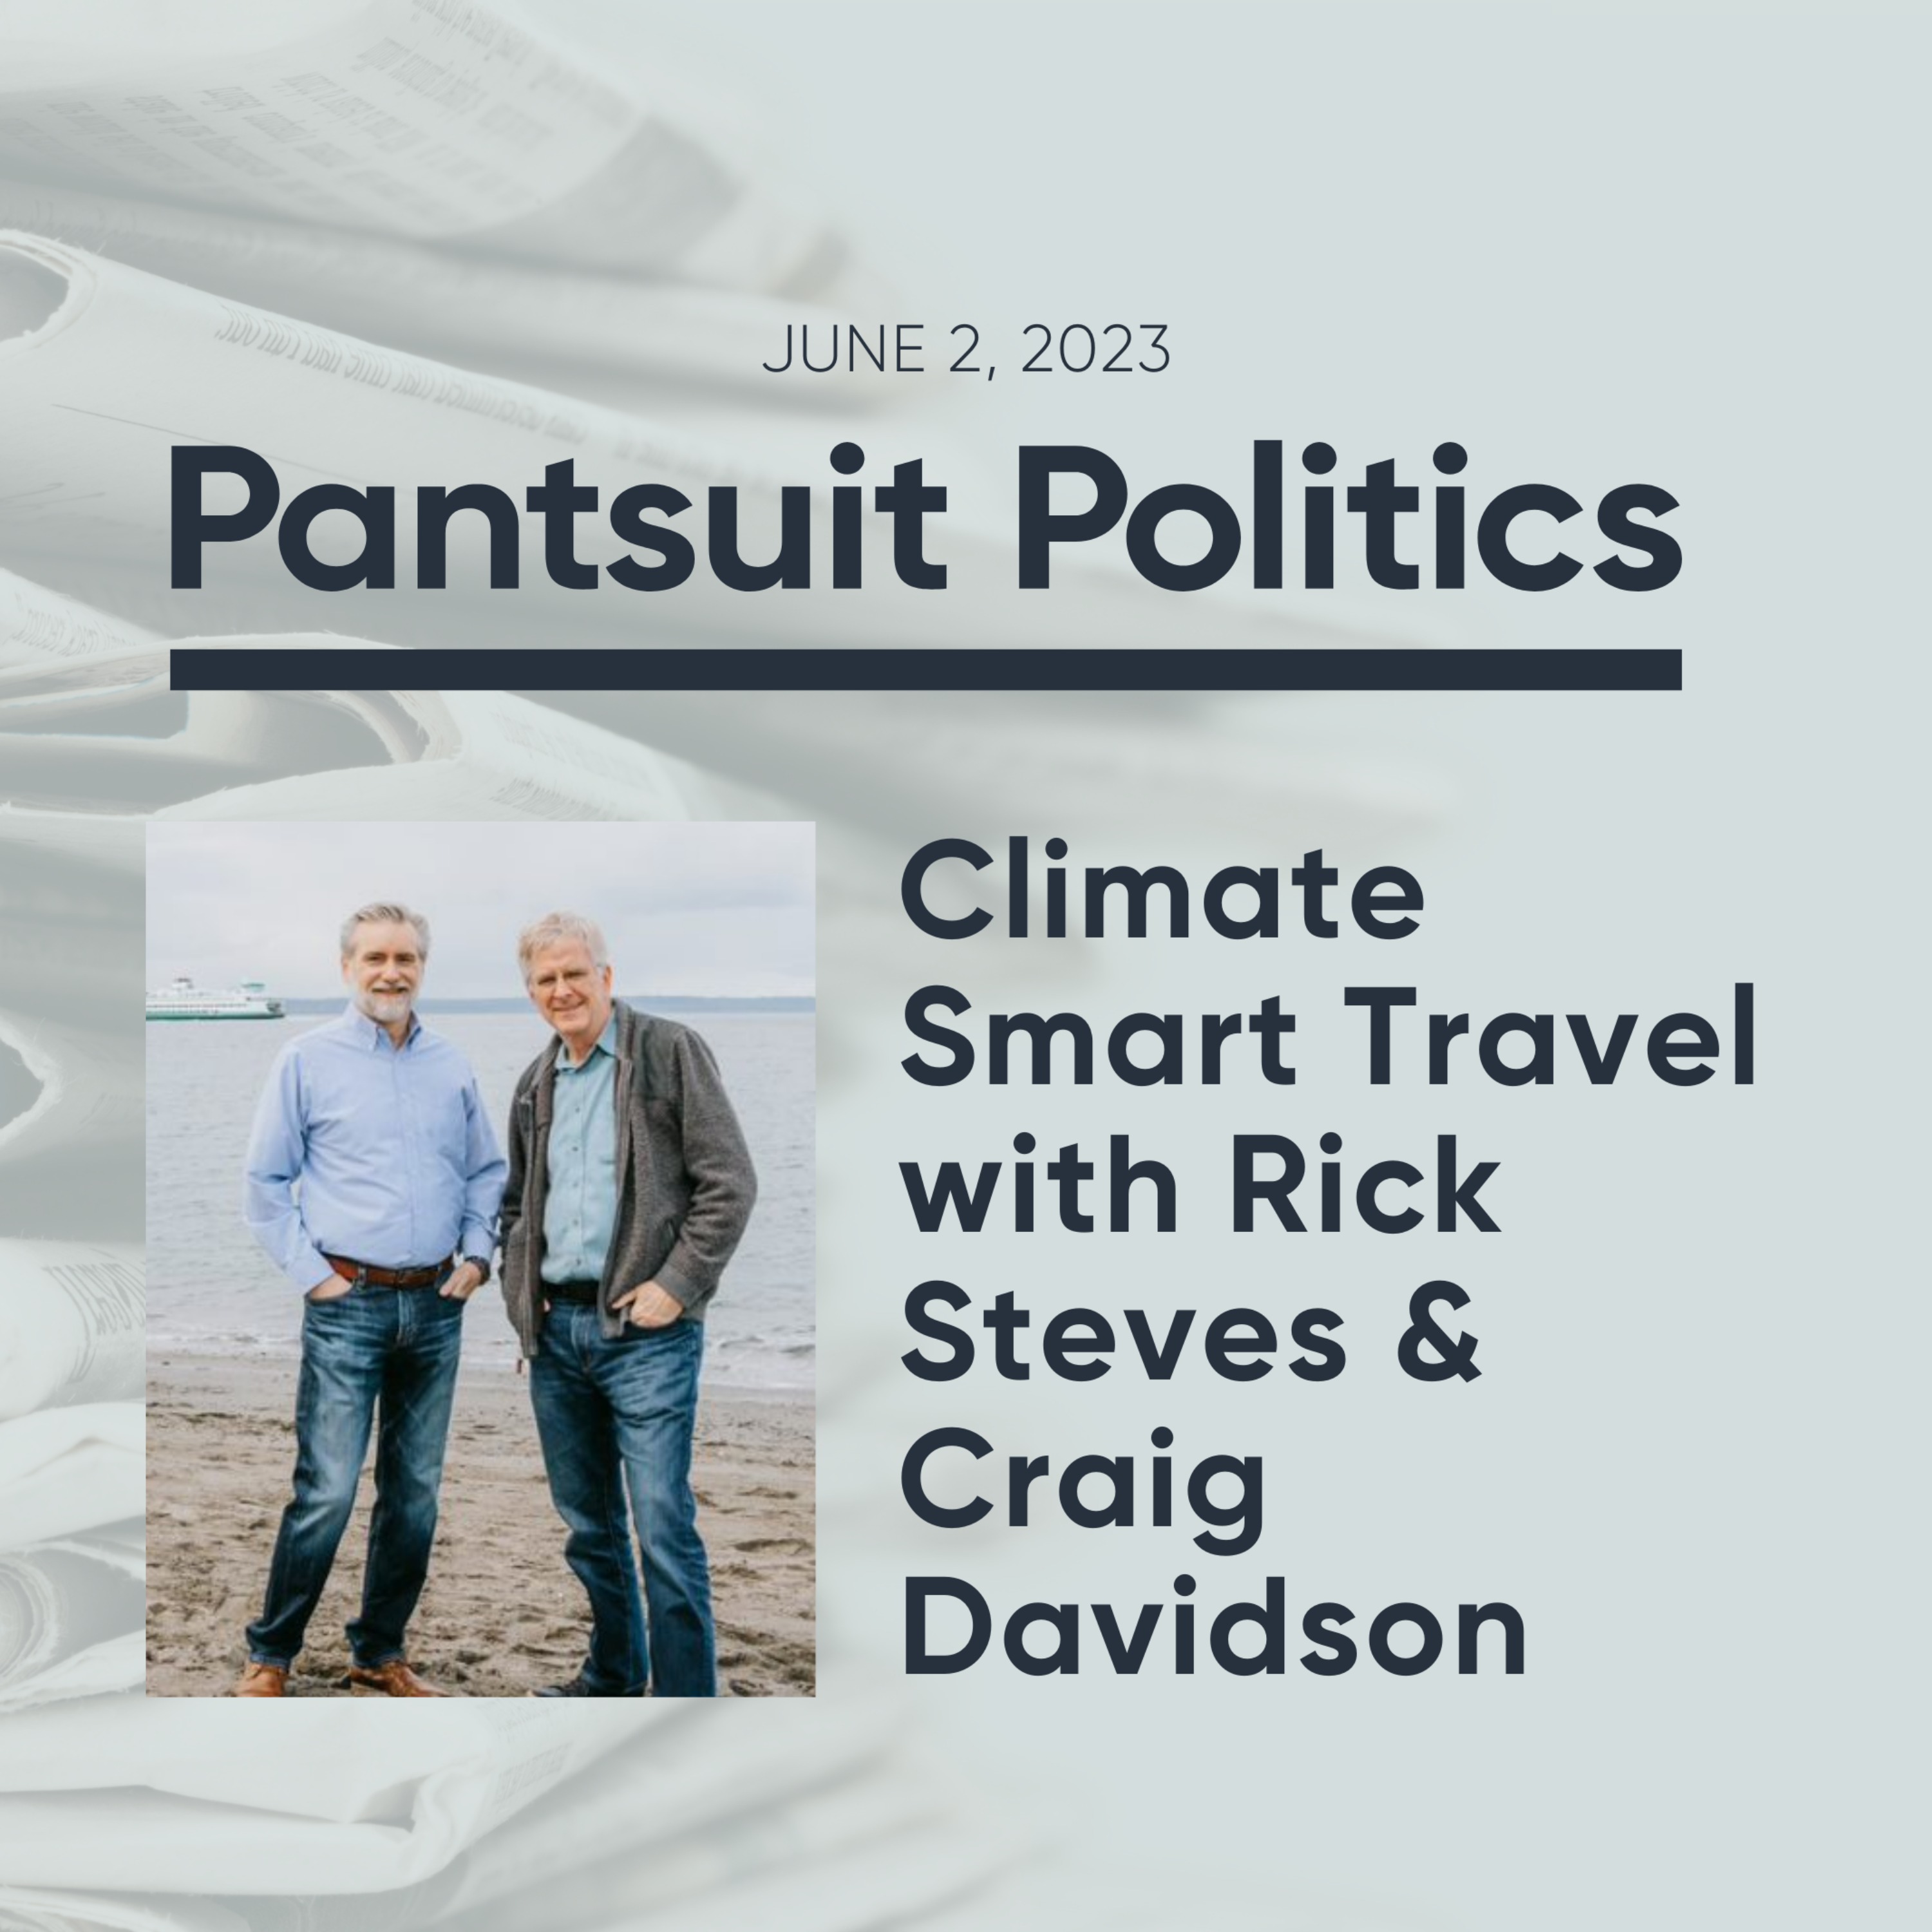 Climate Smart Travel with Rick Steves & Craig Davidson